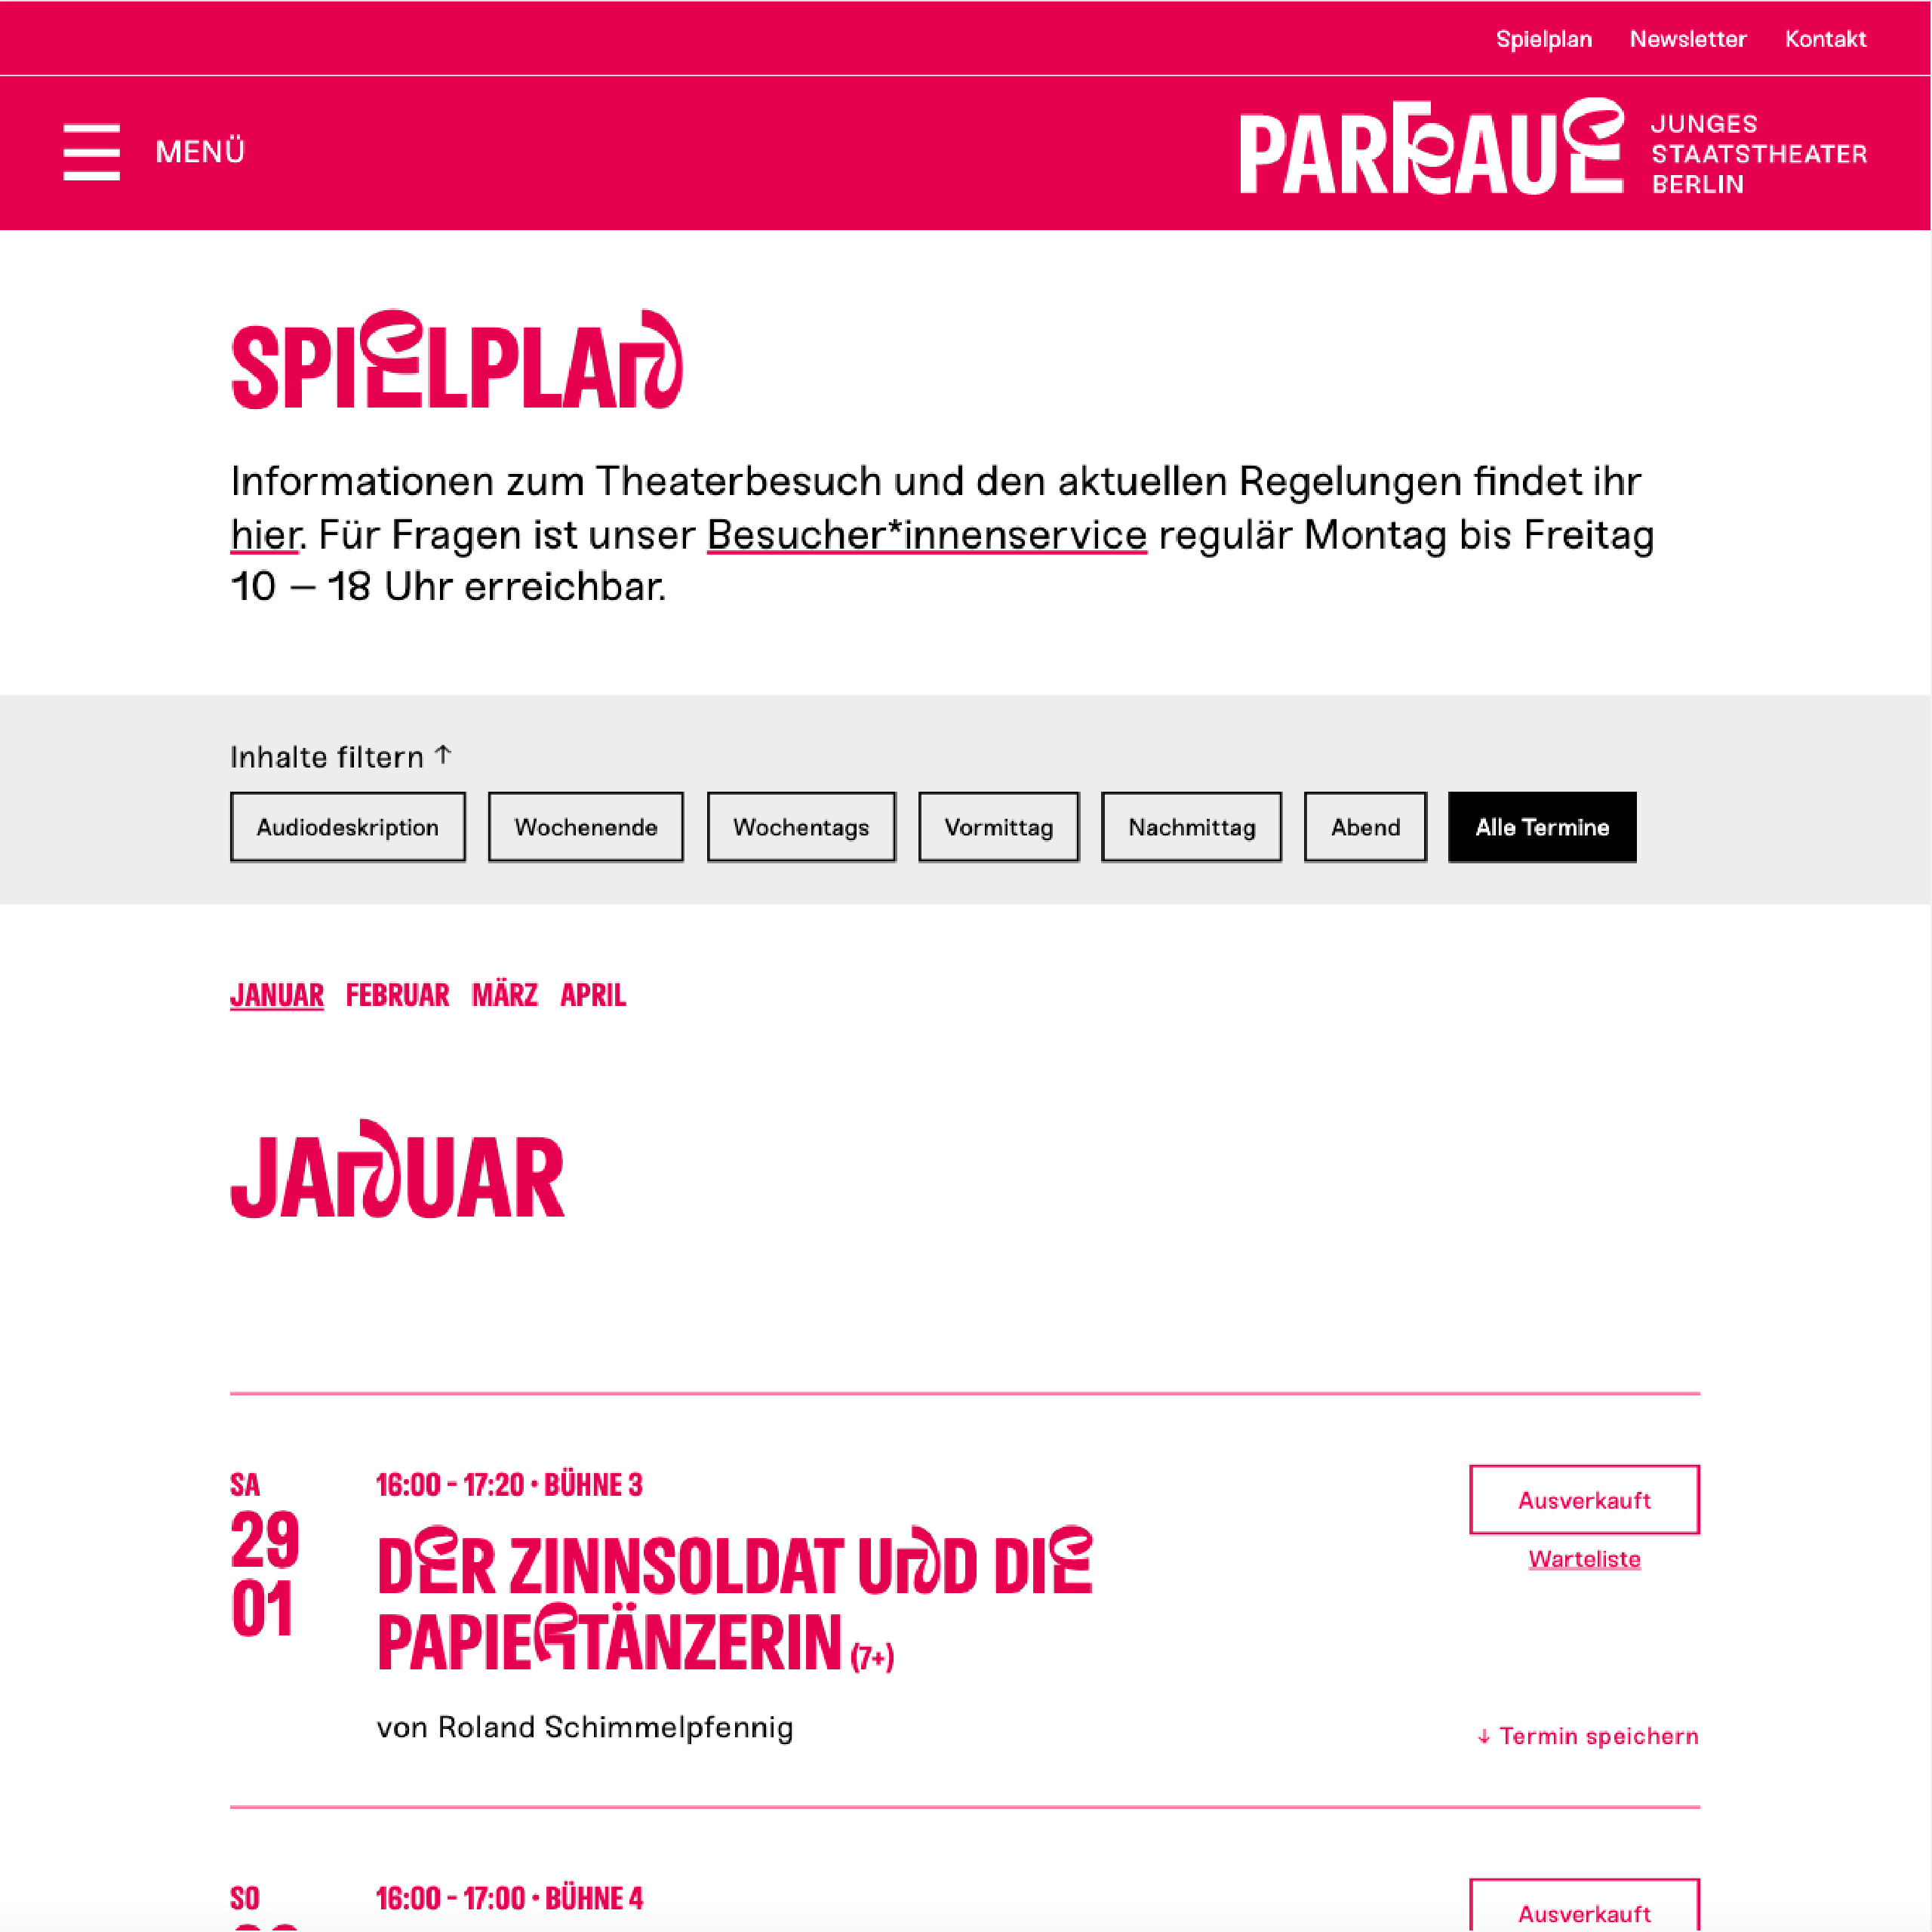 Daniel-Stuhlpfarrer_typedesign_graphicdesign_custom-font_custom-typeface_typography_projects_Parkaue_03